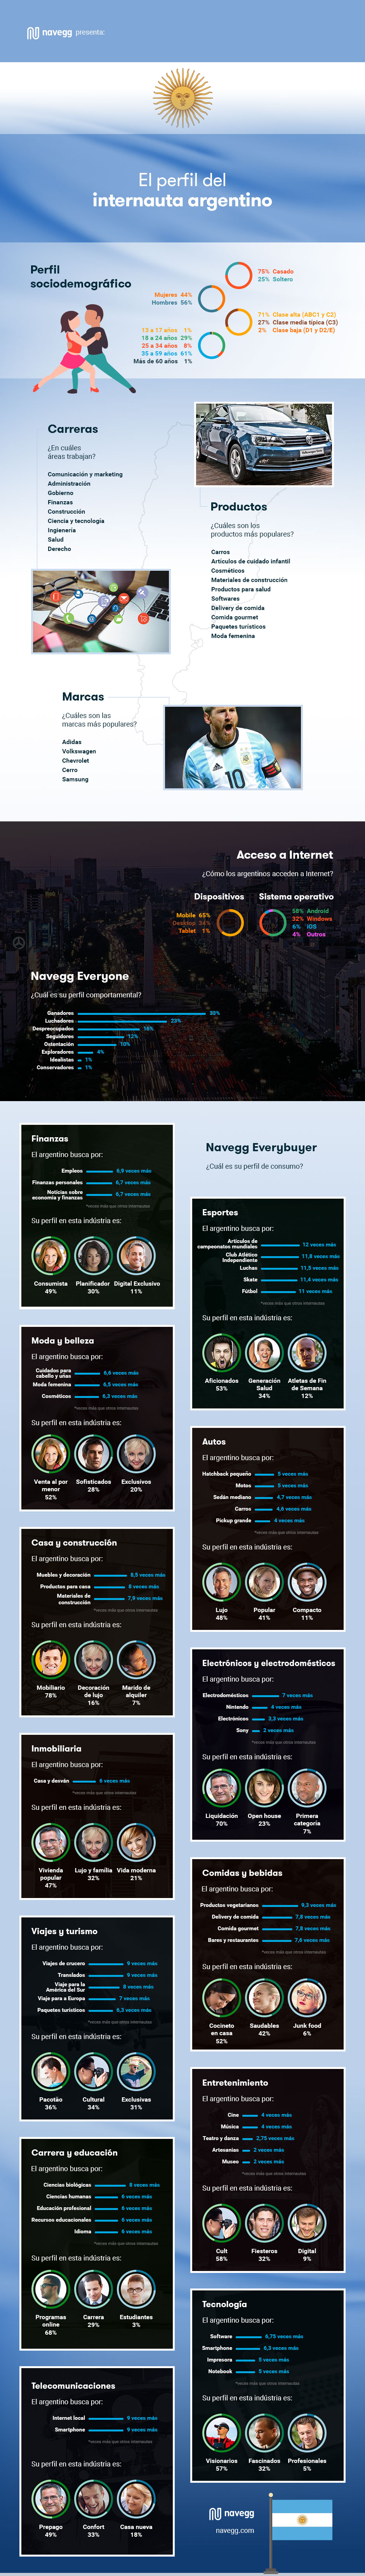 navegg-infografico-el-perfil-del-internauta-argentino